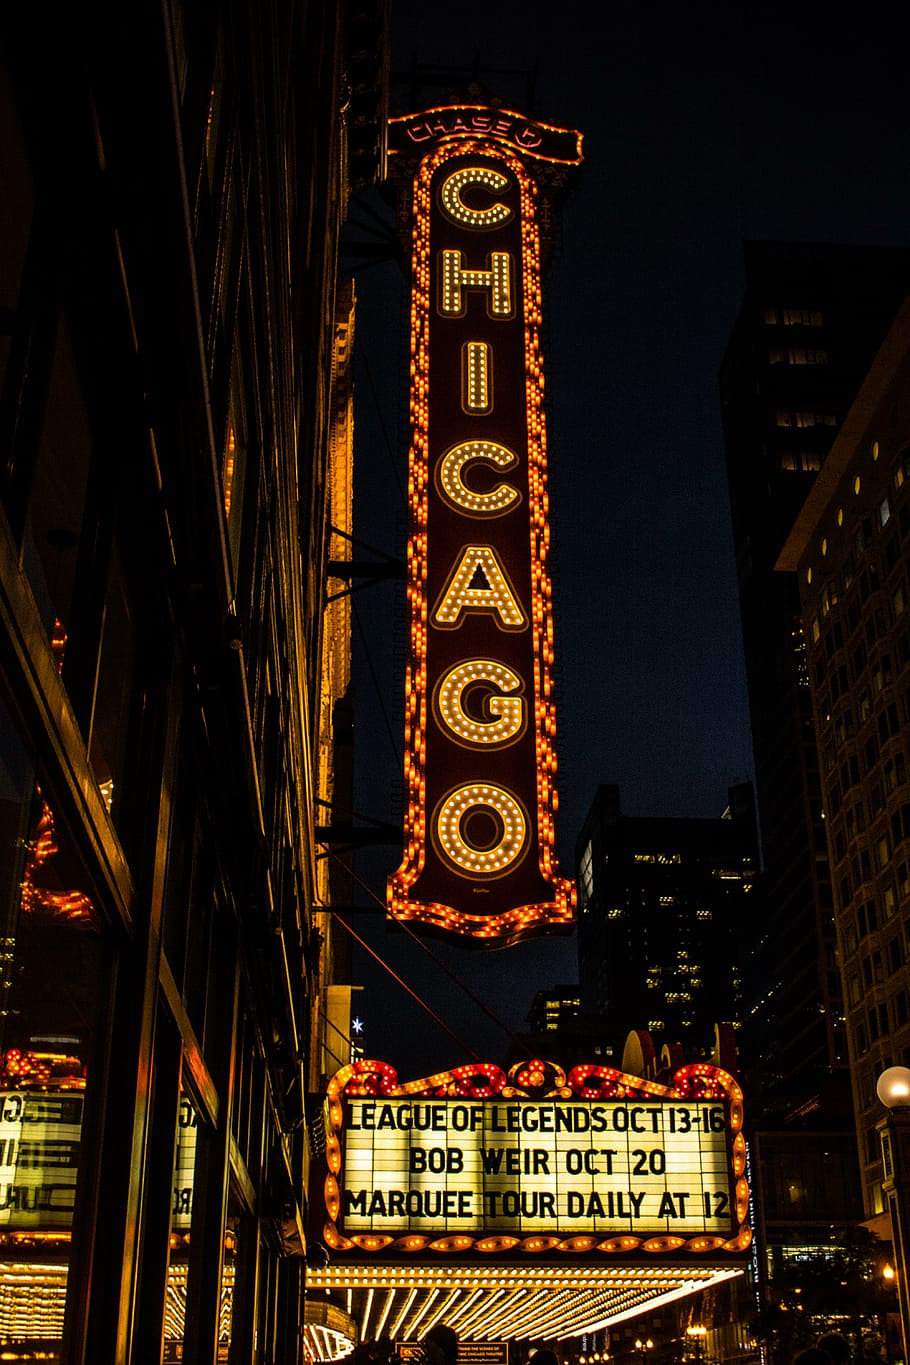 gedung chicago, hampir, waktu, chicago, menyala, signage, malam hari, malam, gelap, lampu